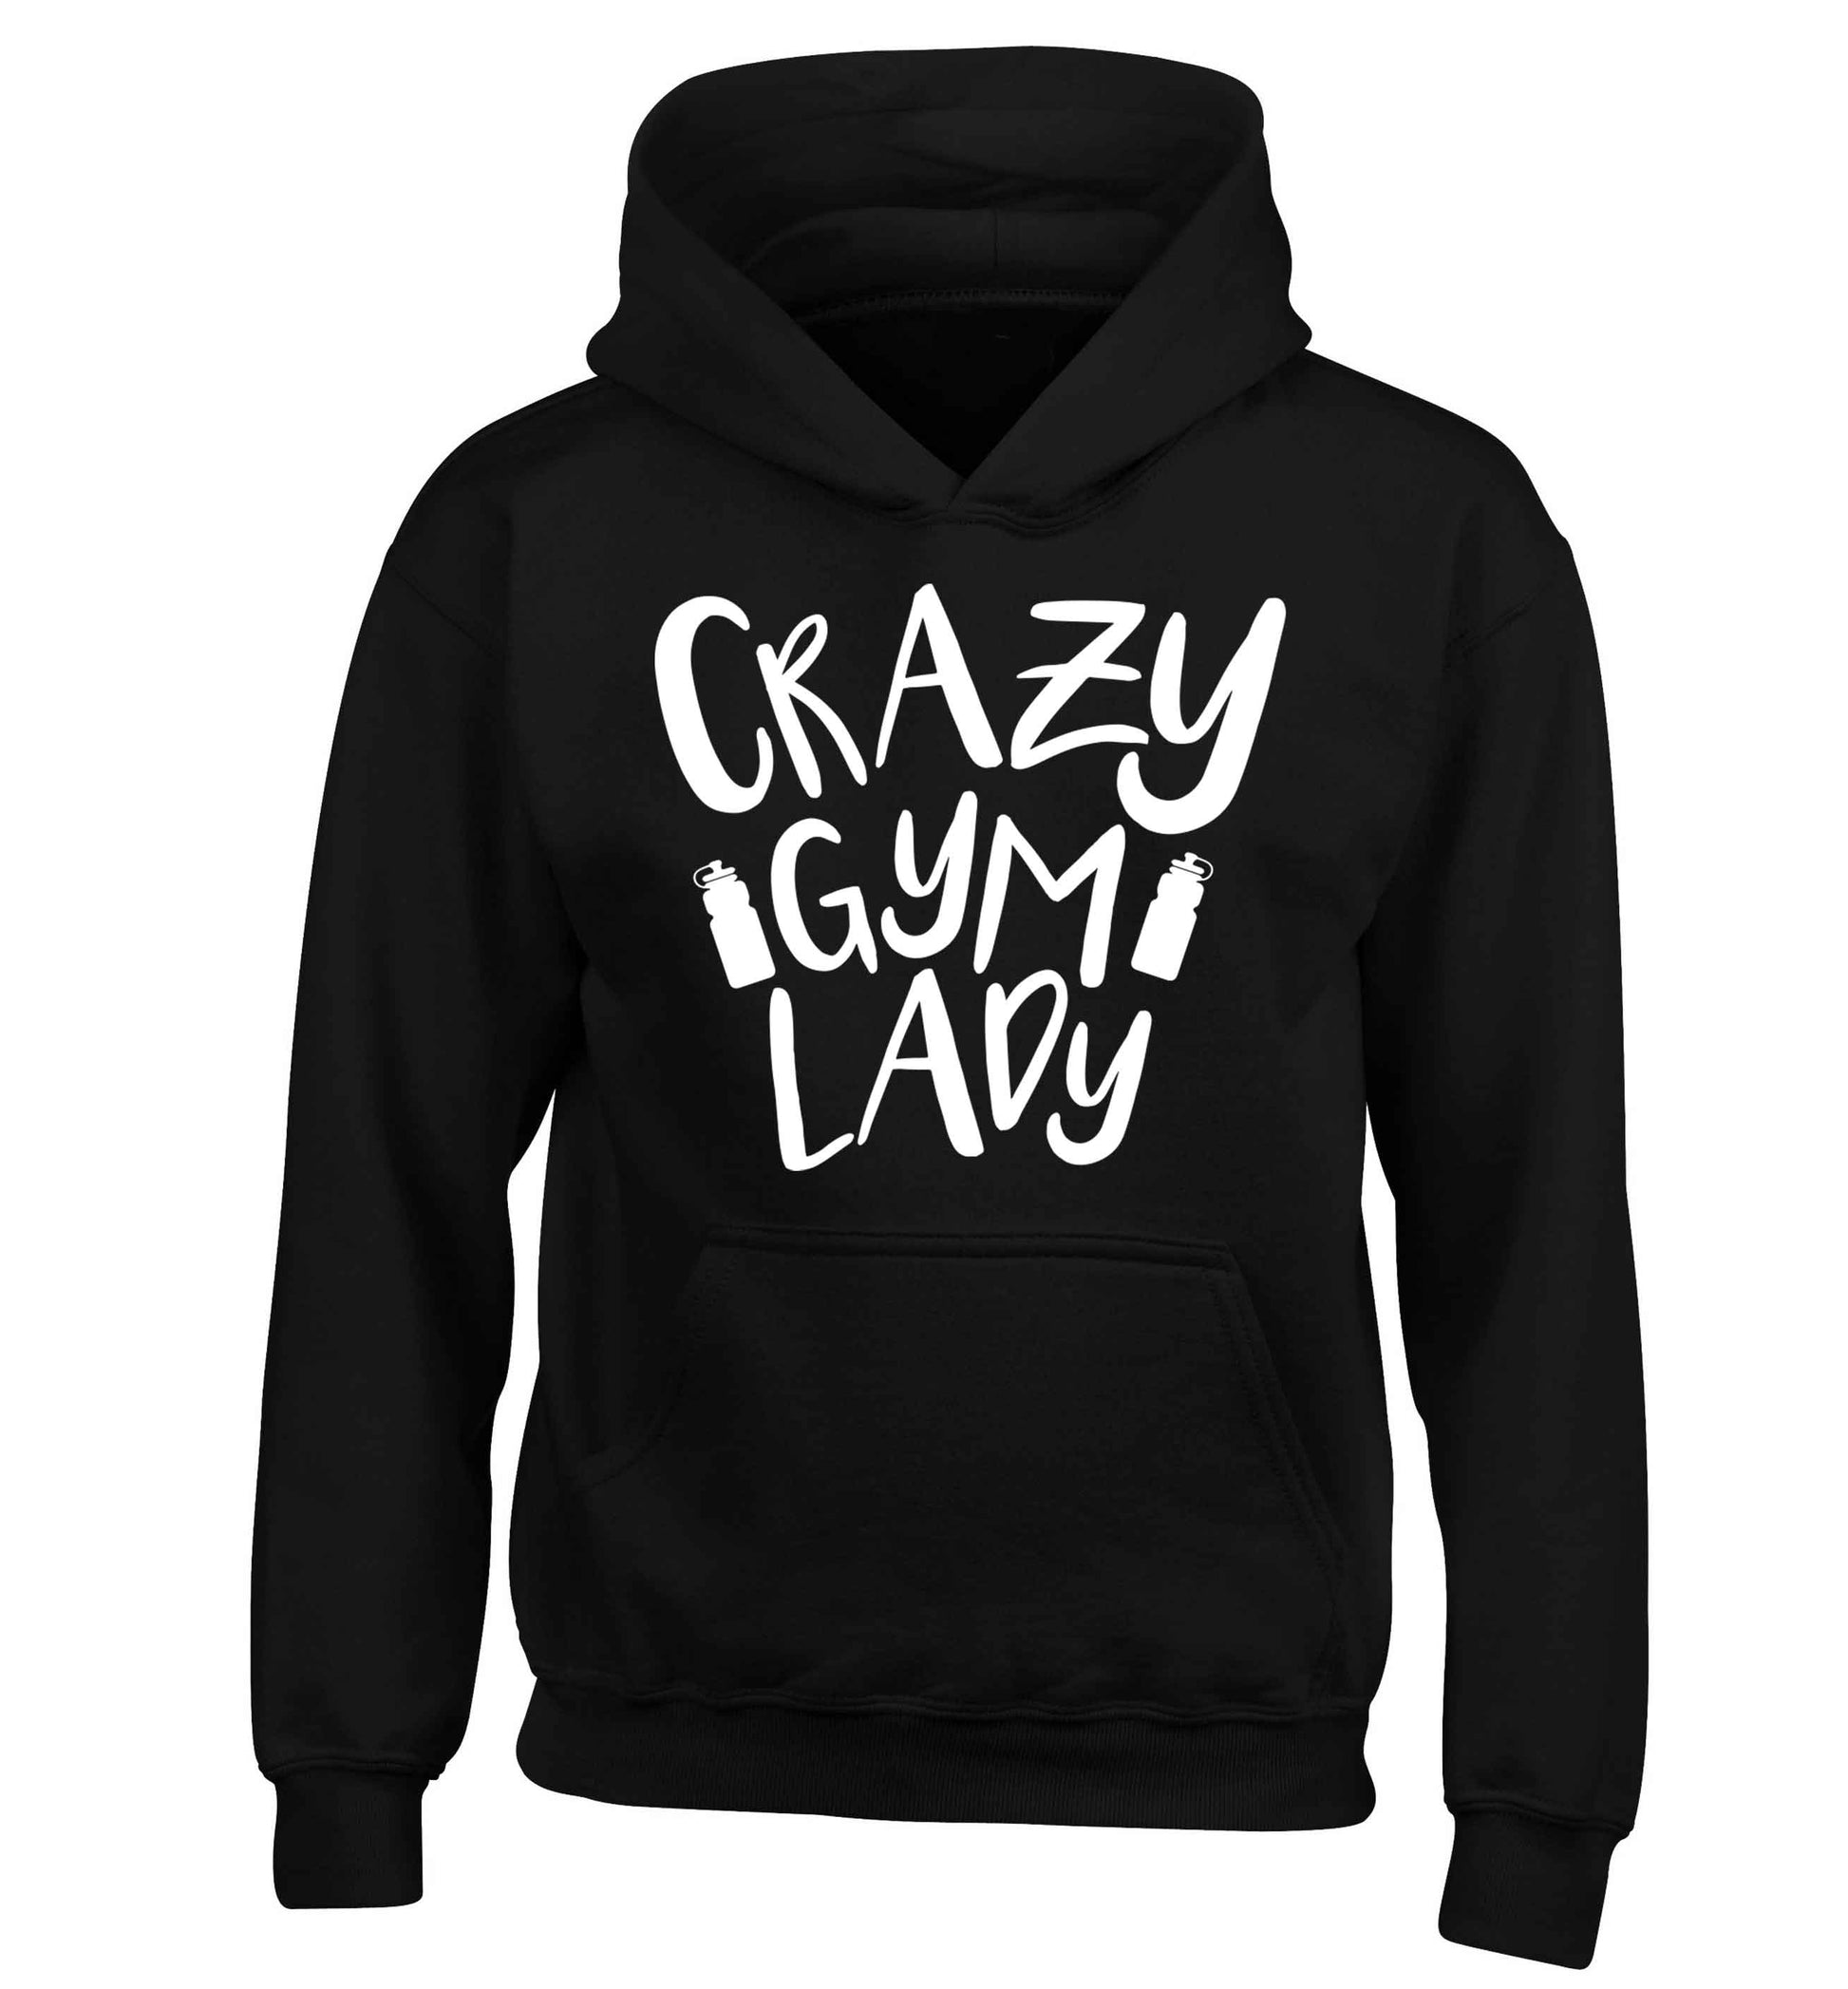 Crazy gym lady children's black hoodie 12-13 Years